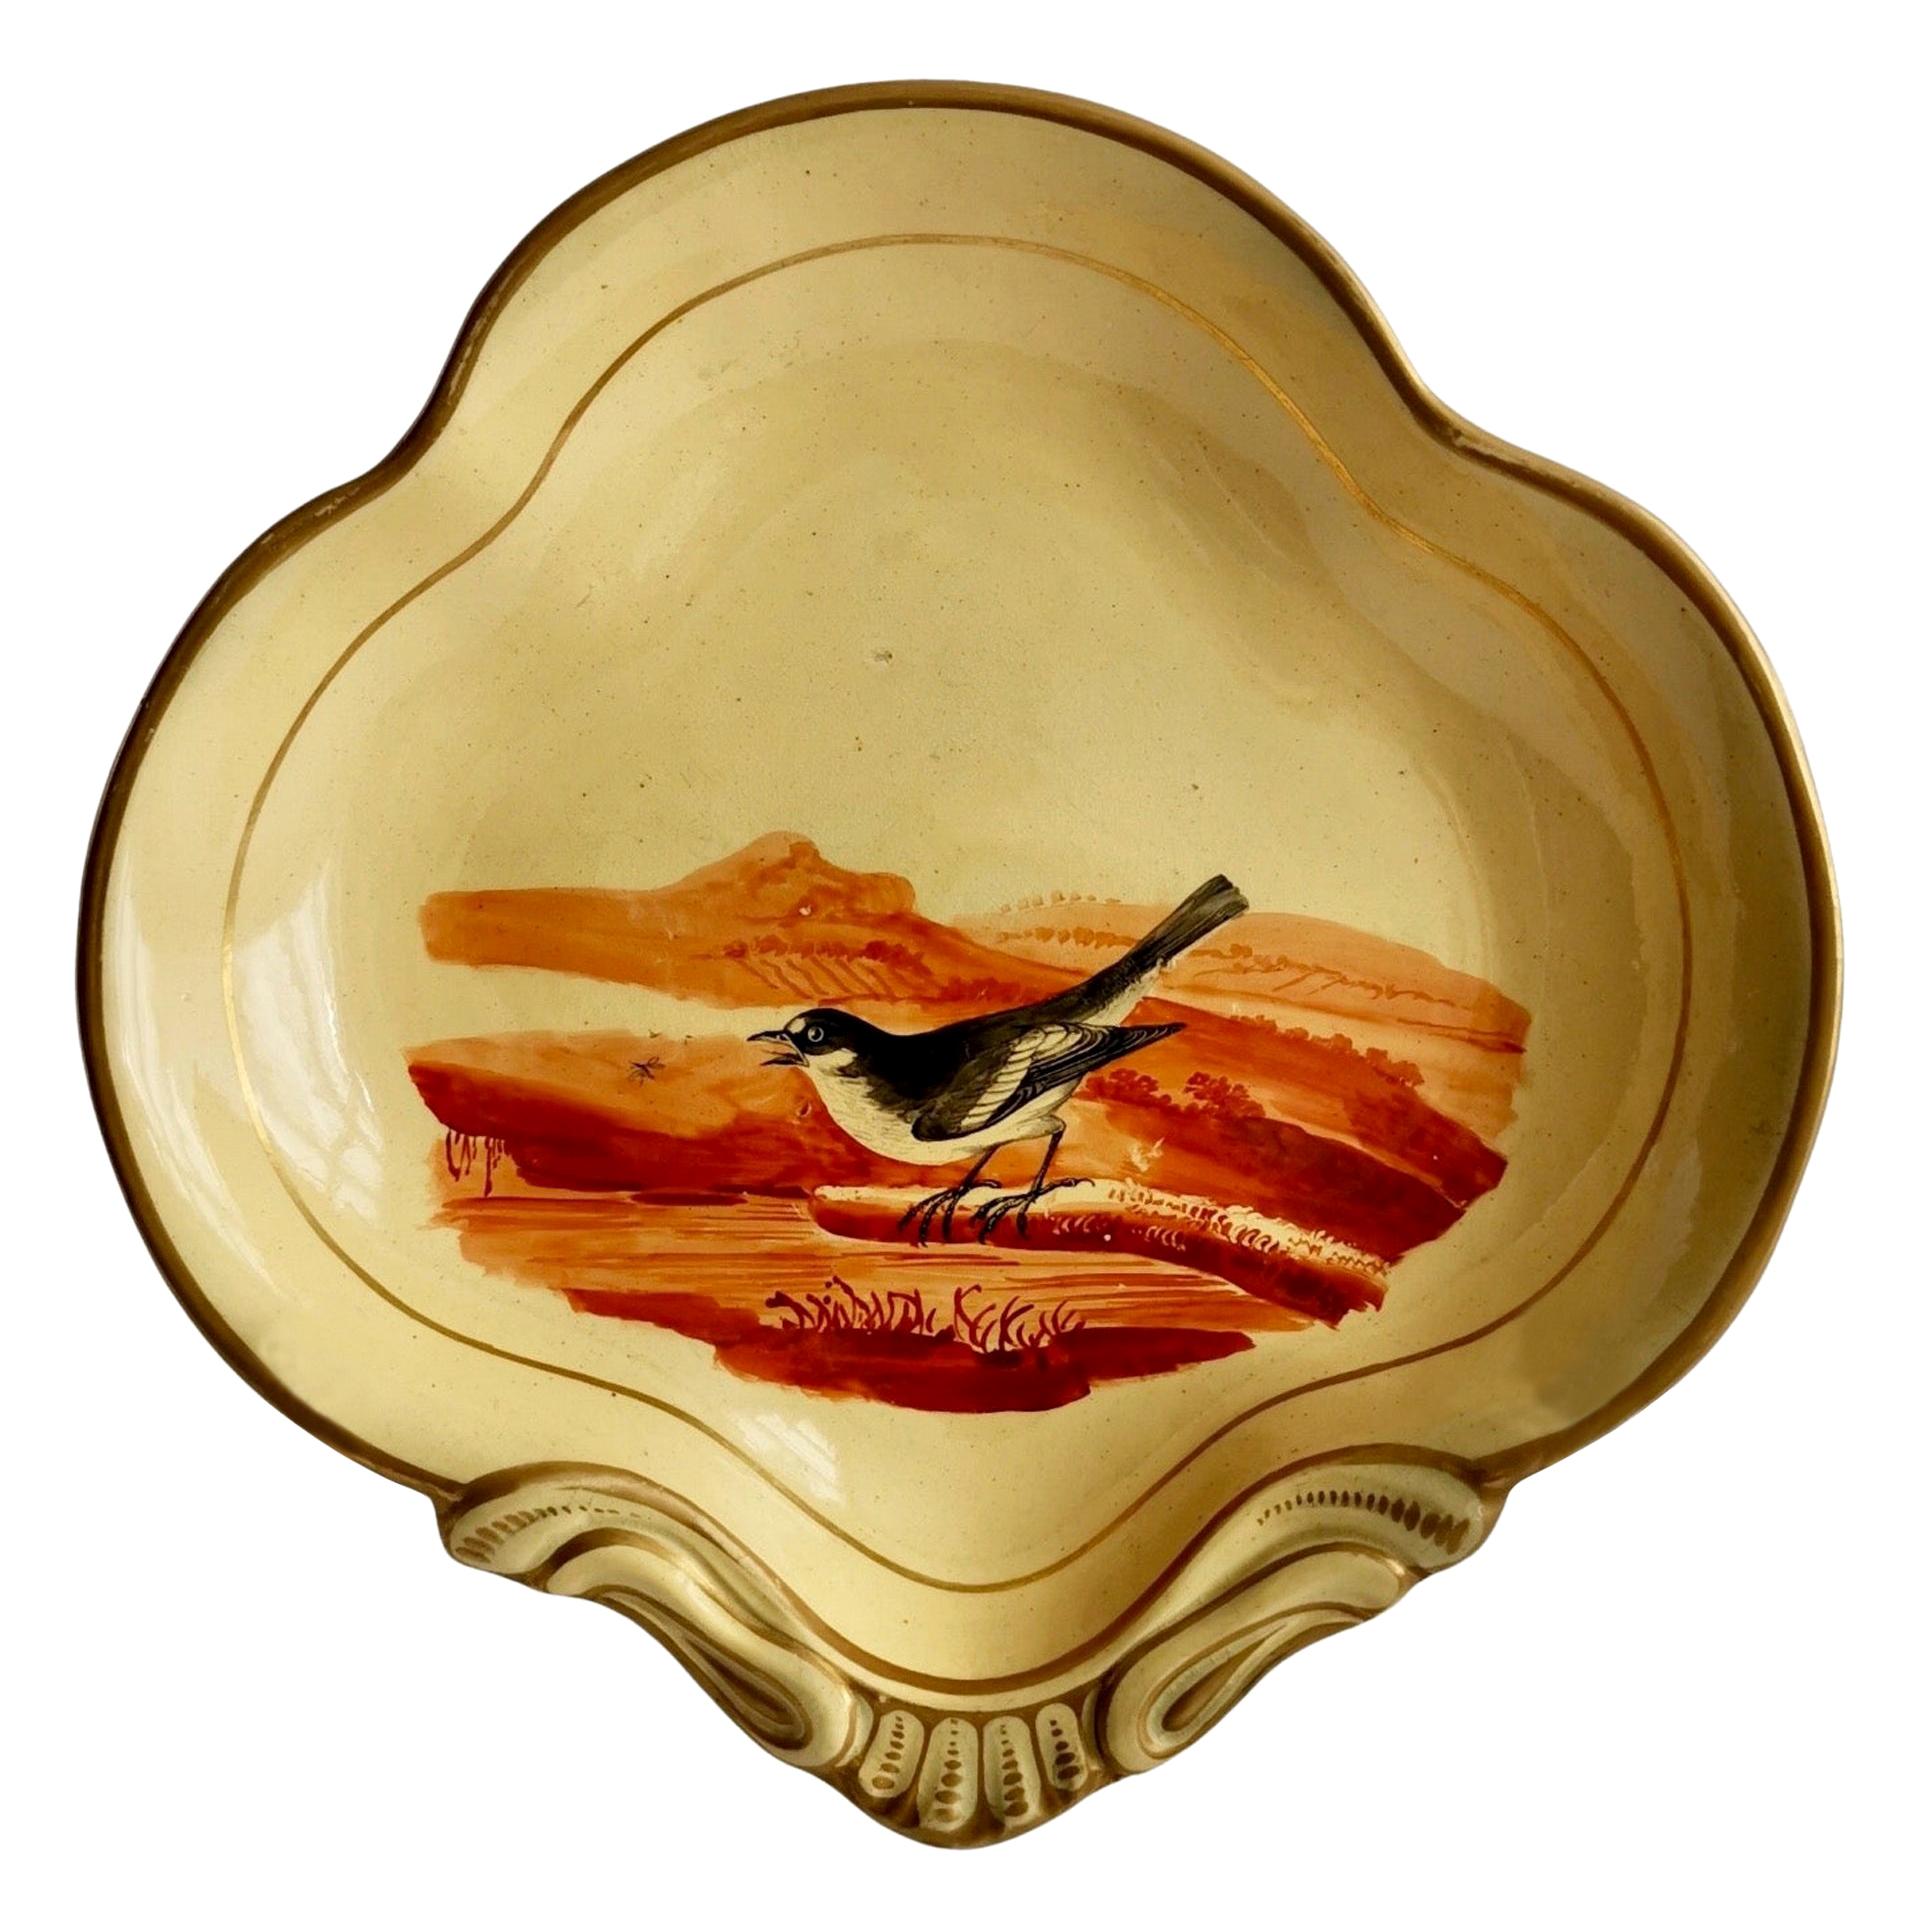 Ridgway Drabware Shell Dish with Bird After Bewick, Beige, Ochre, Regency 1808